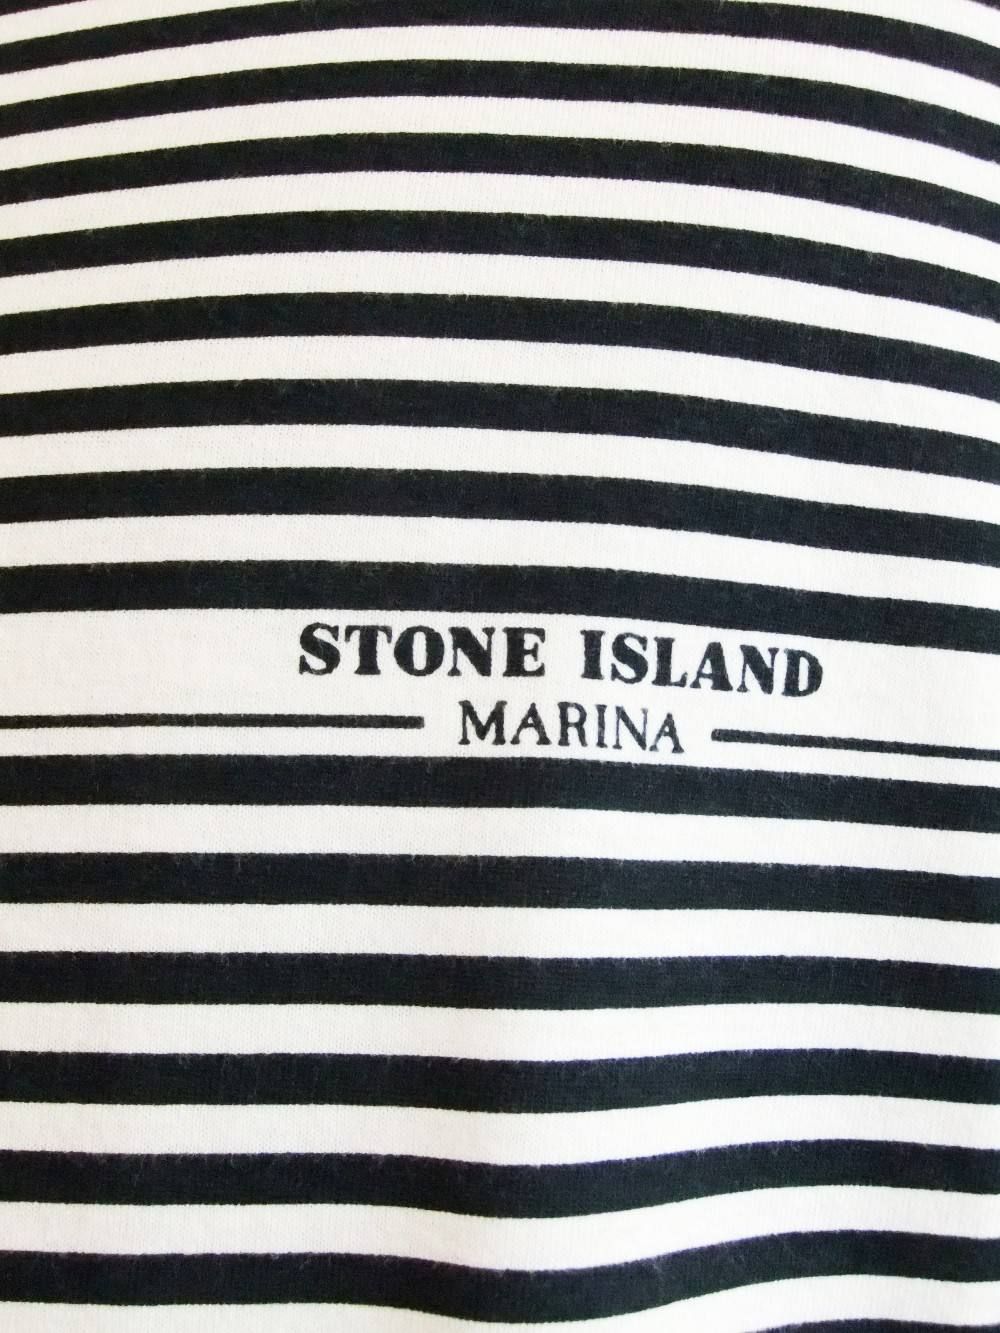 STONE ISLAND - STONE ISLAND (ストーン アイランド) マリーナ